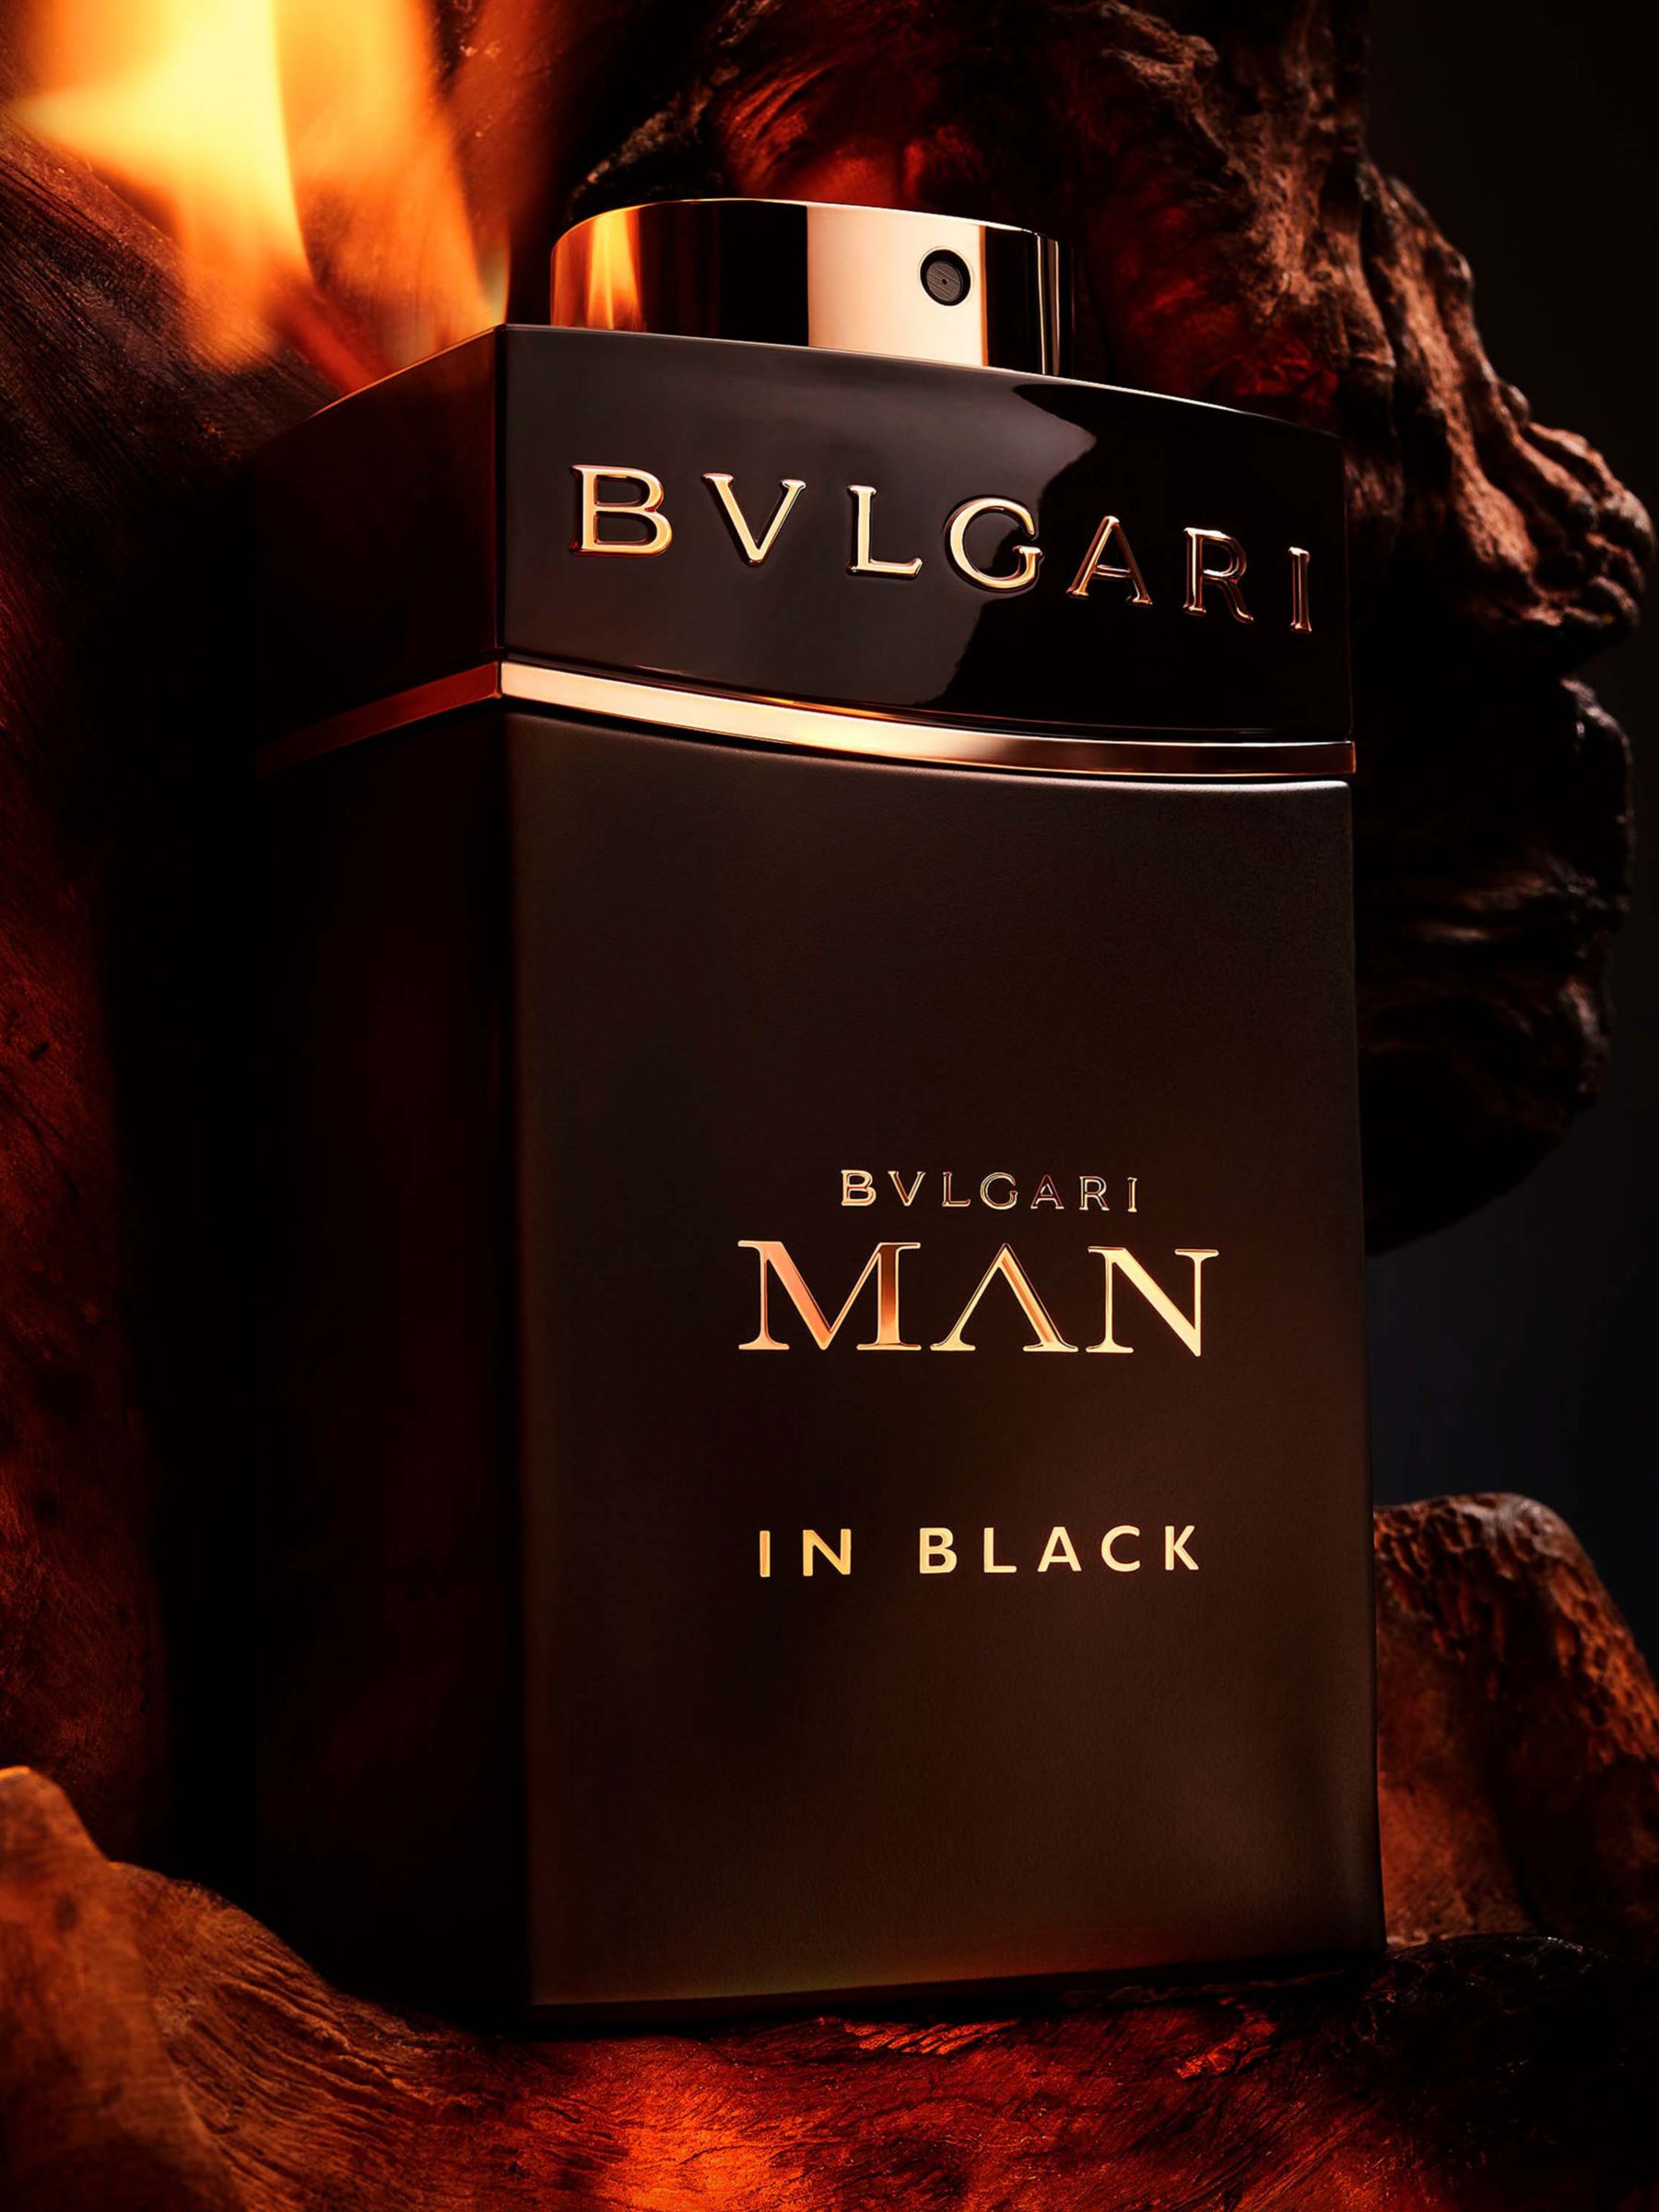 BVLGARI Man In Black Eau de Parfum, 100ml at John Lewis & Partners